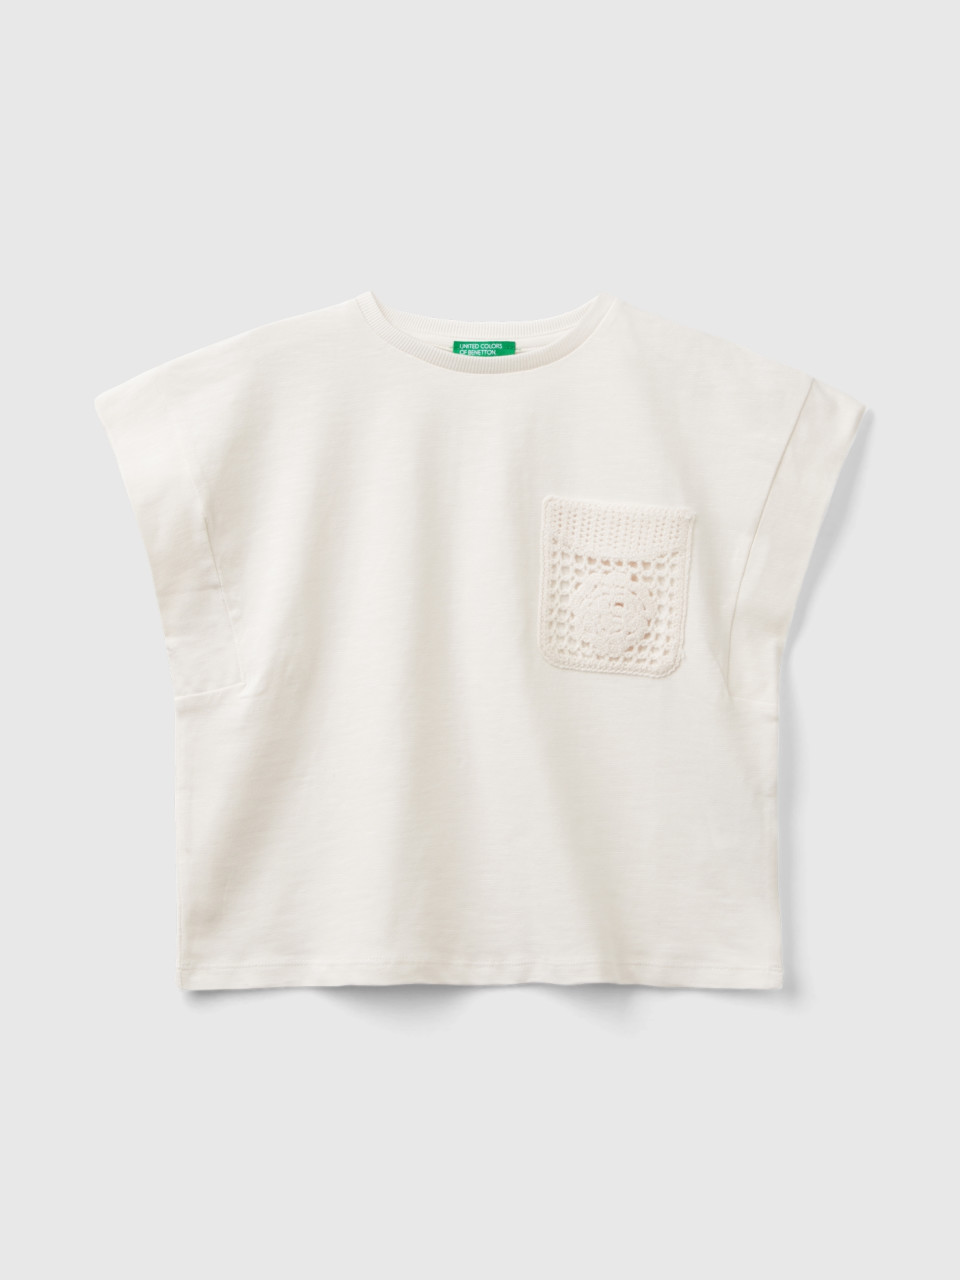 Benetton, T-shirt Mit Makramee-patch, Cremeweiss, female